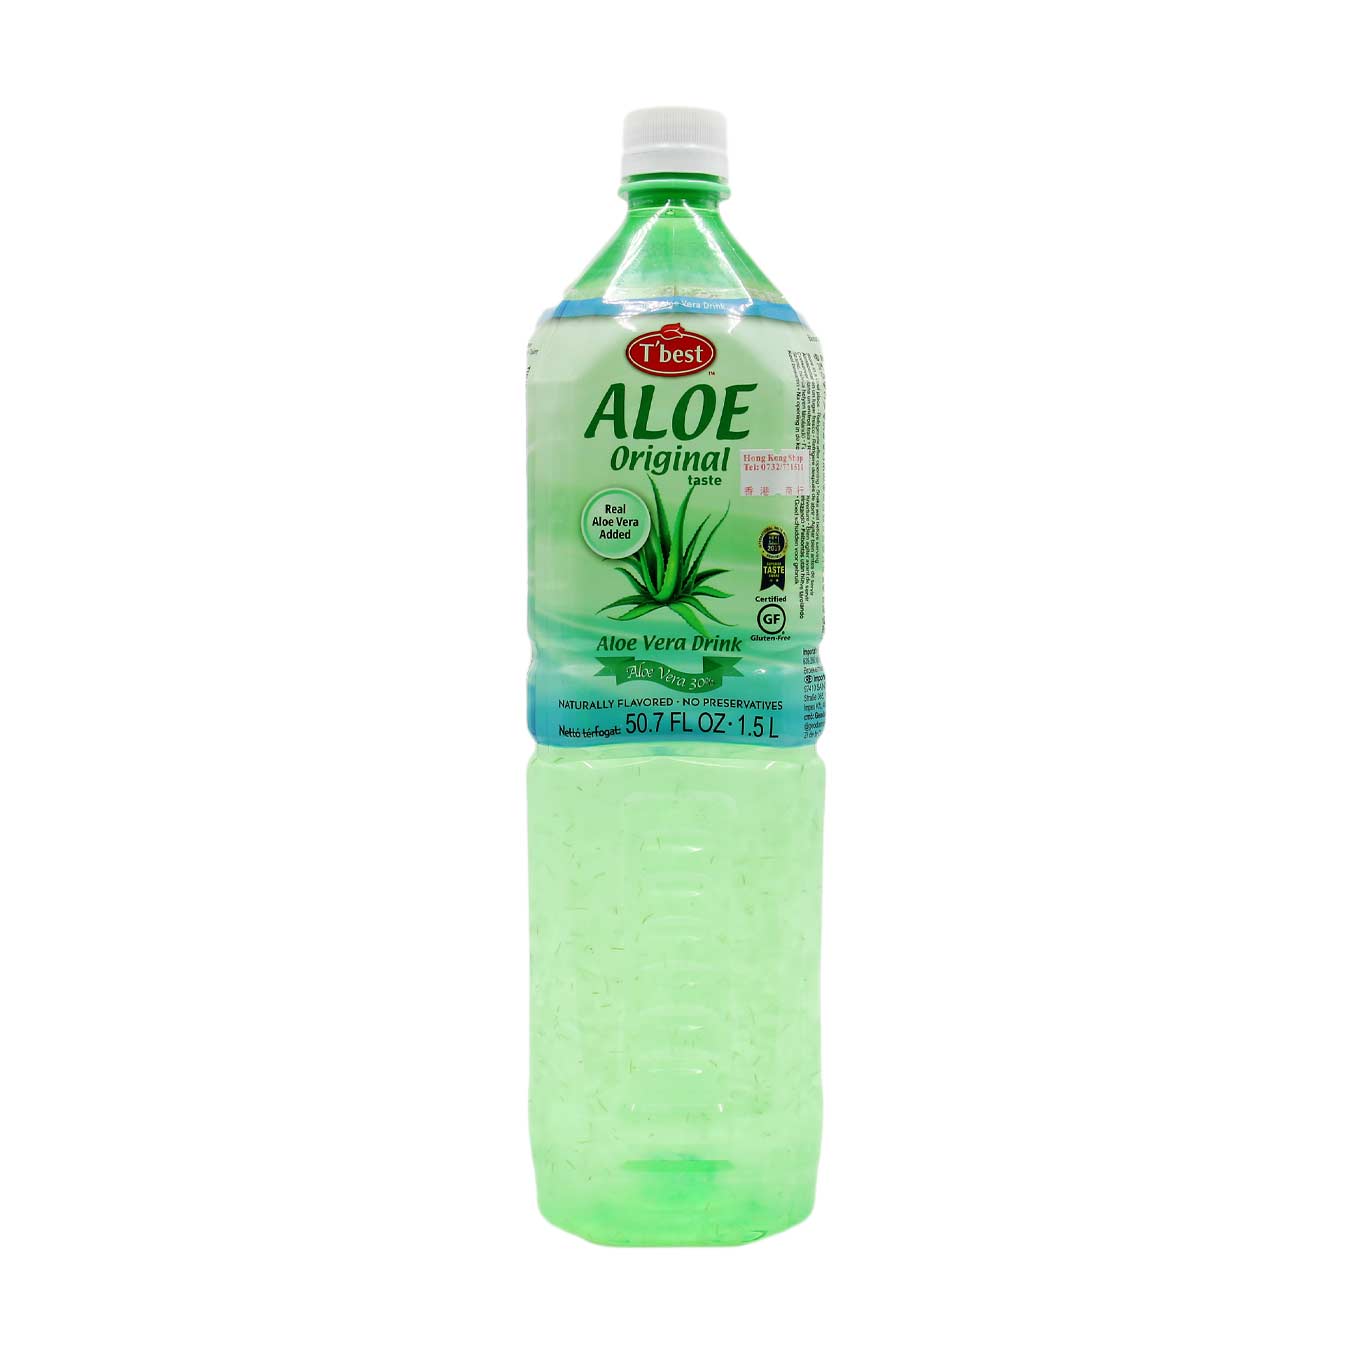 Dollar draai revolutie Aloe Vera Drink, T'best, 1.5L online kaufen | Hongkongshop.at